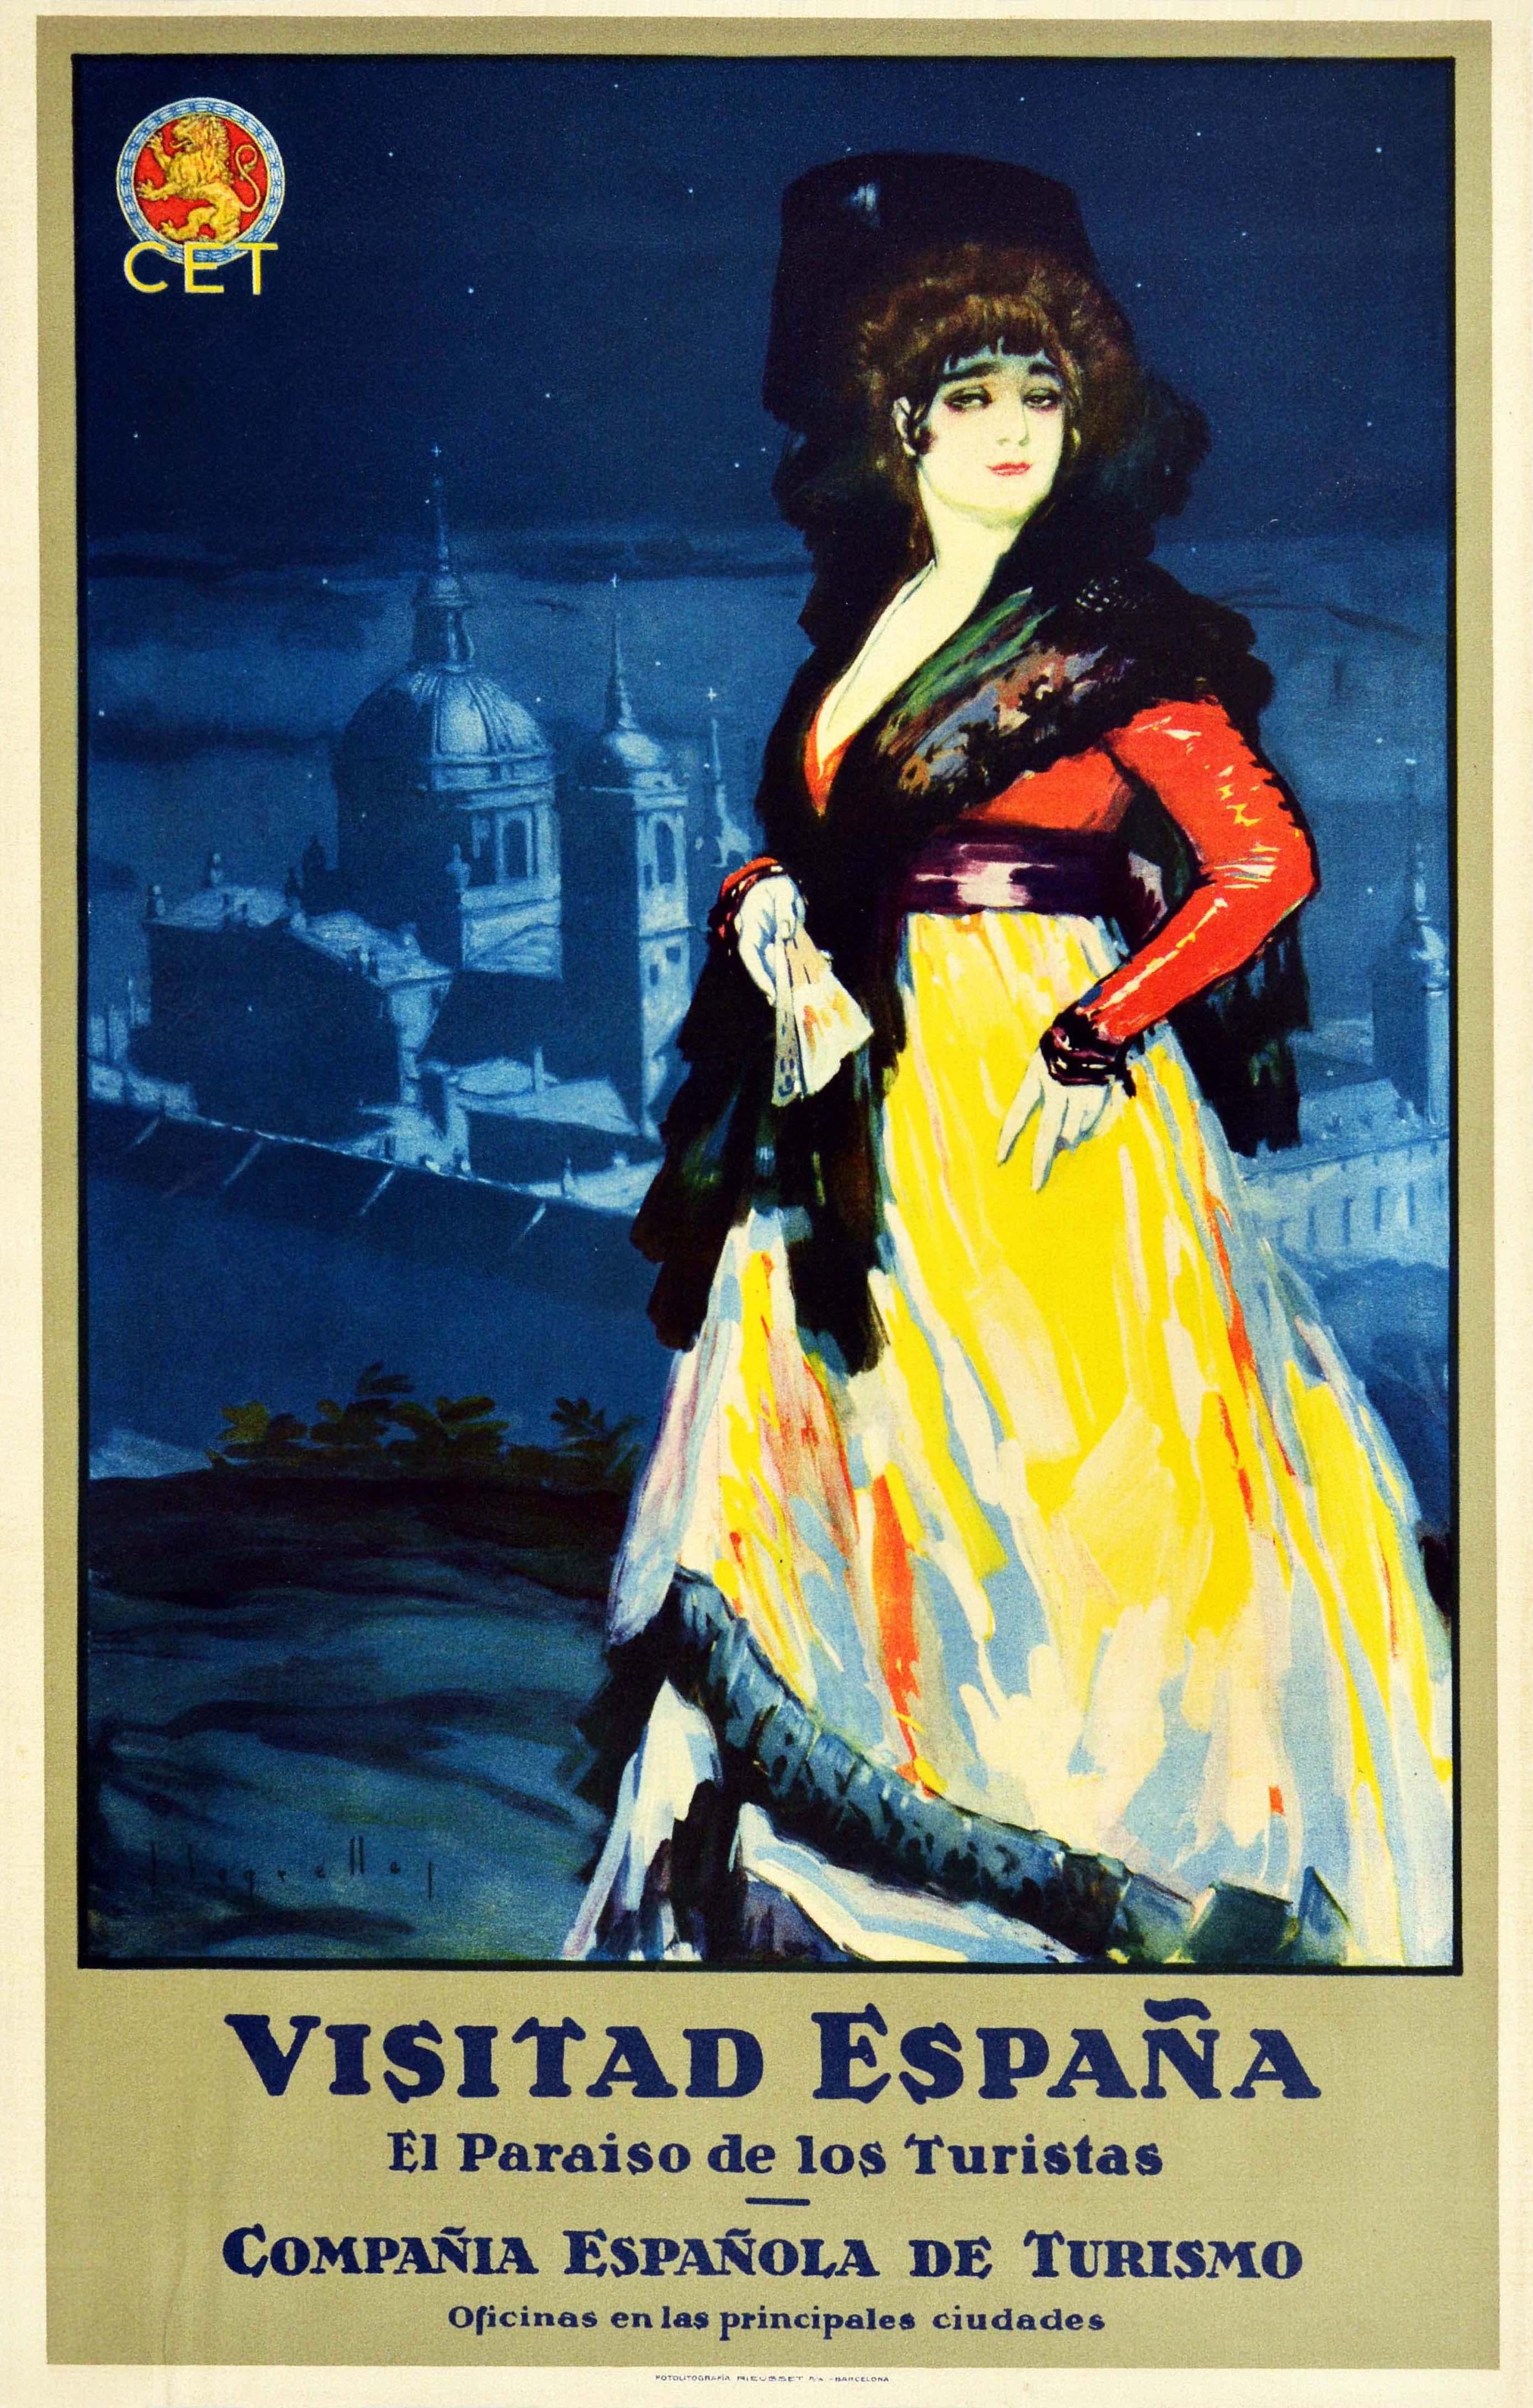 J. Segrelles Print - Original Vintage Travel Poster Visitad Espana El Paraiso Spain Tourist Paradise